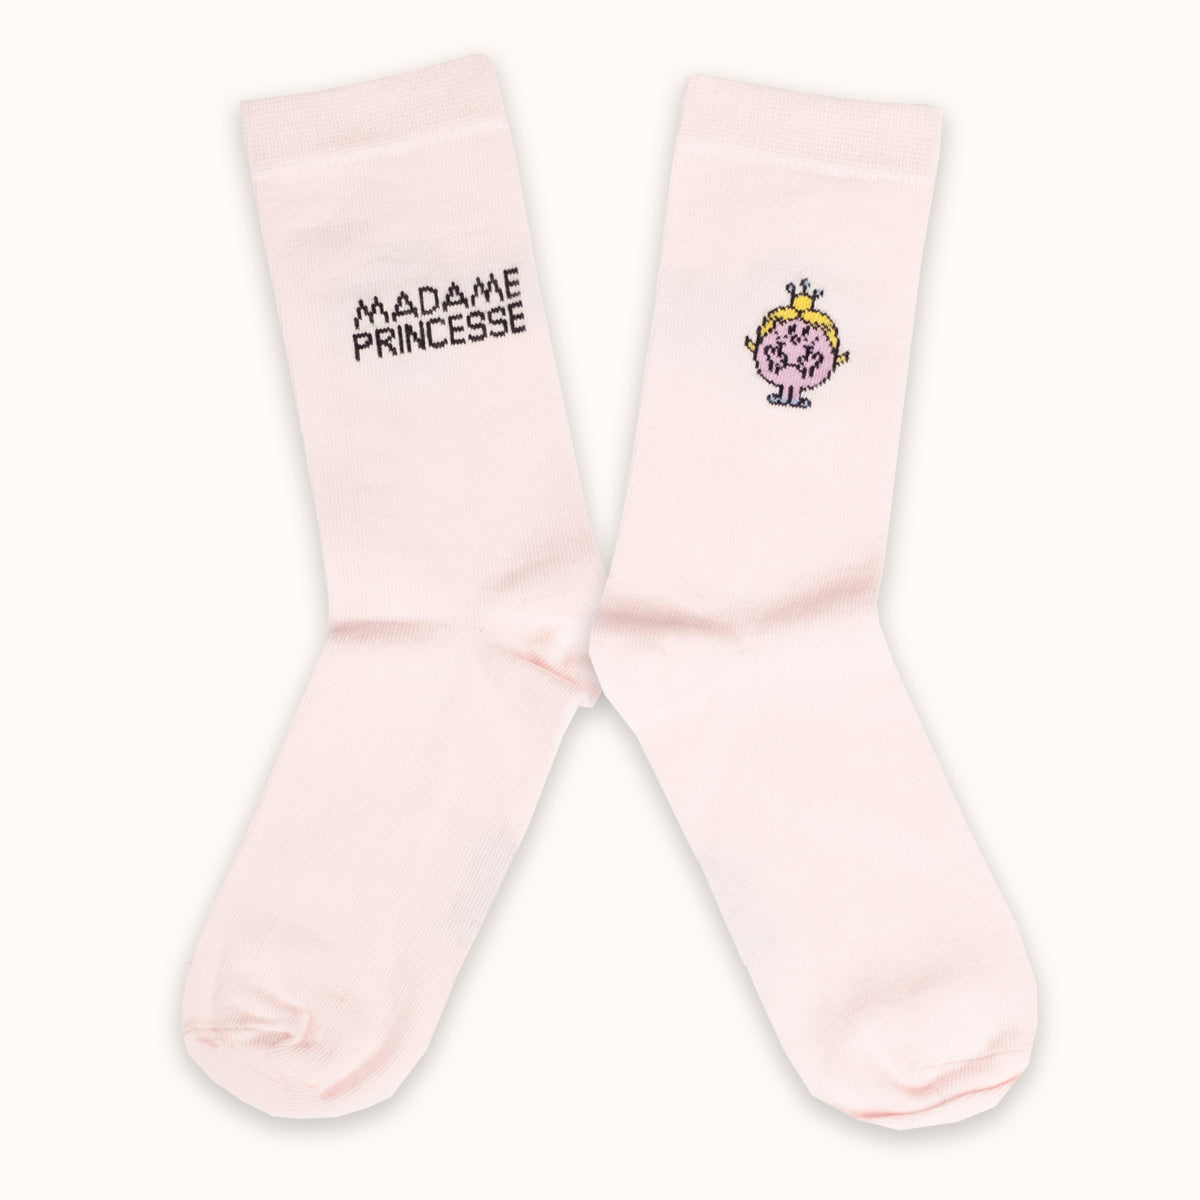 Mr. Madame socks - Madame Princess packshot